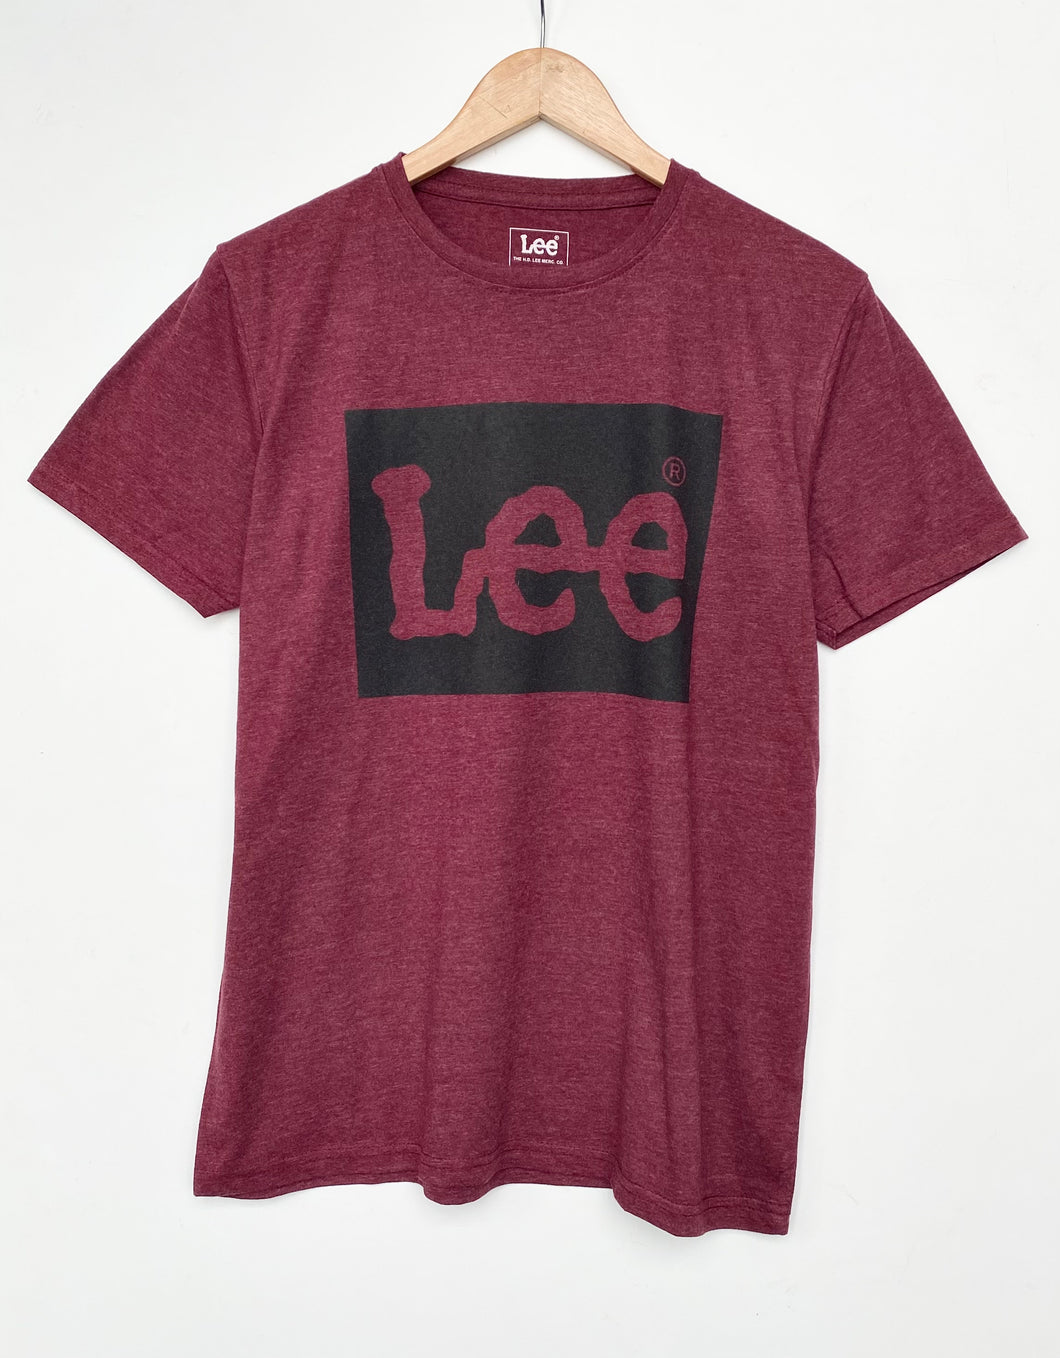 Lee T-shirt (M)